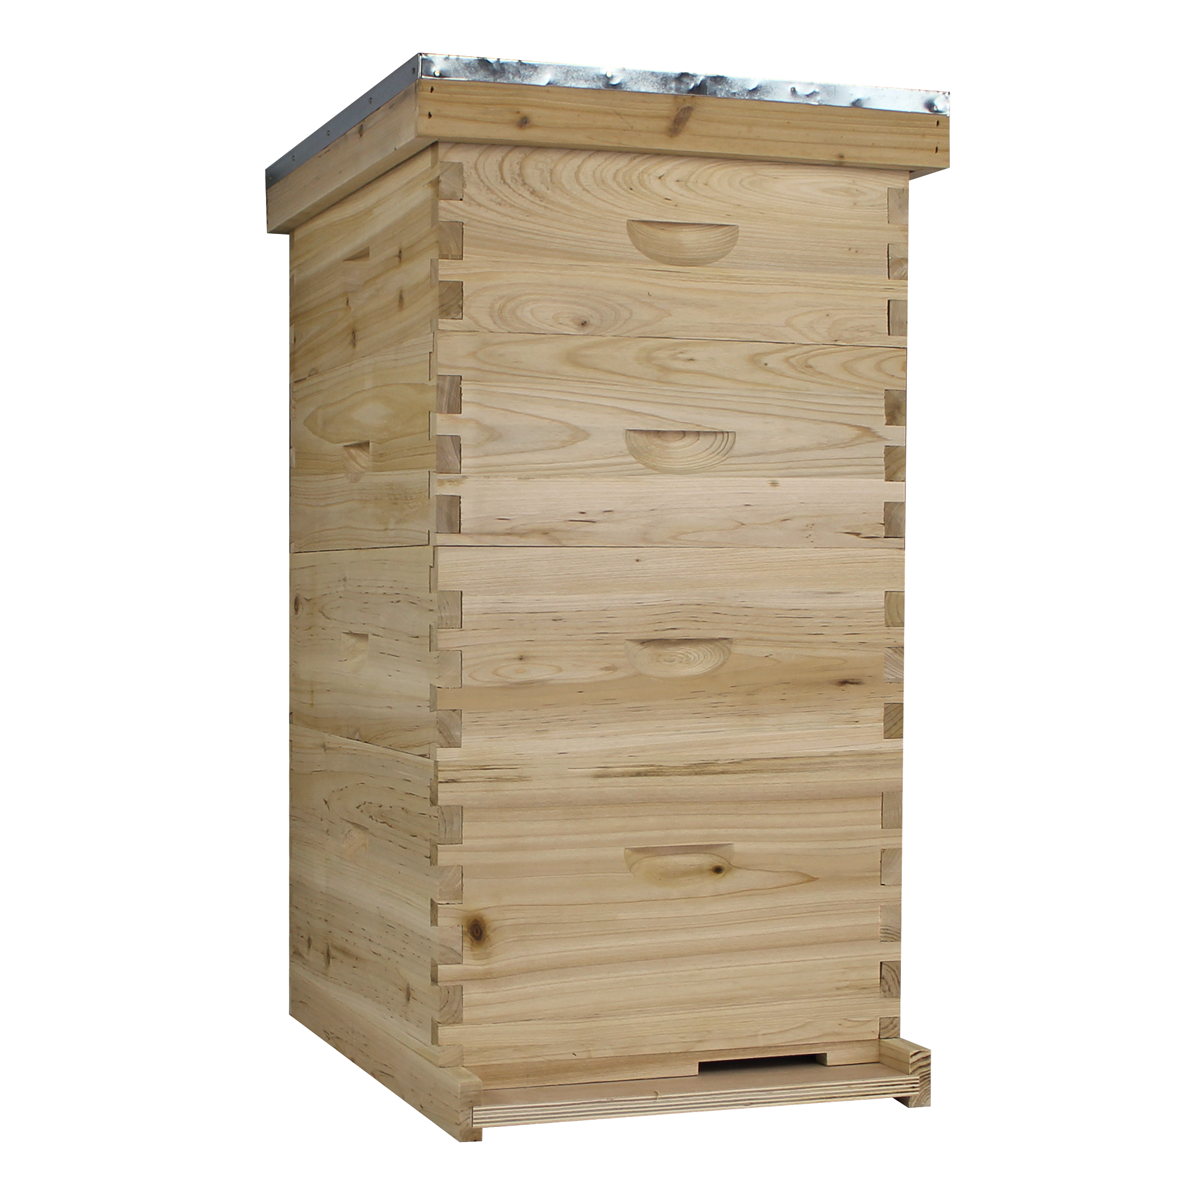 NuBee 10 Frame Beehive With 1 Deep Bee Box & 3 Medium Bee Boxes